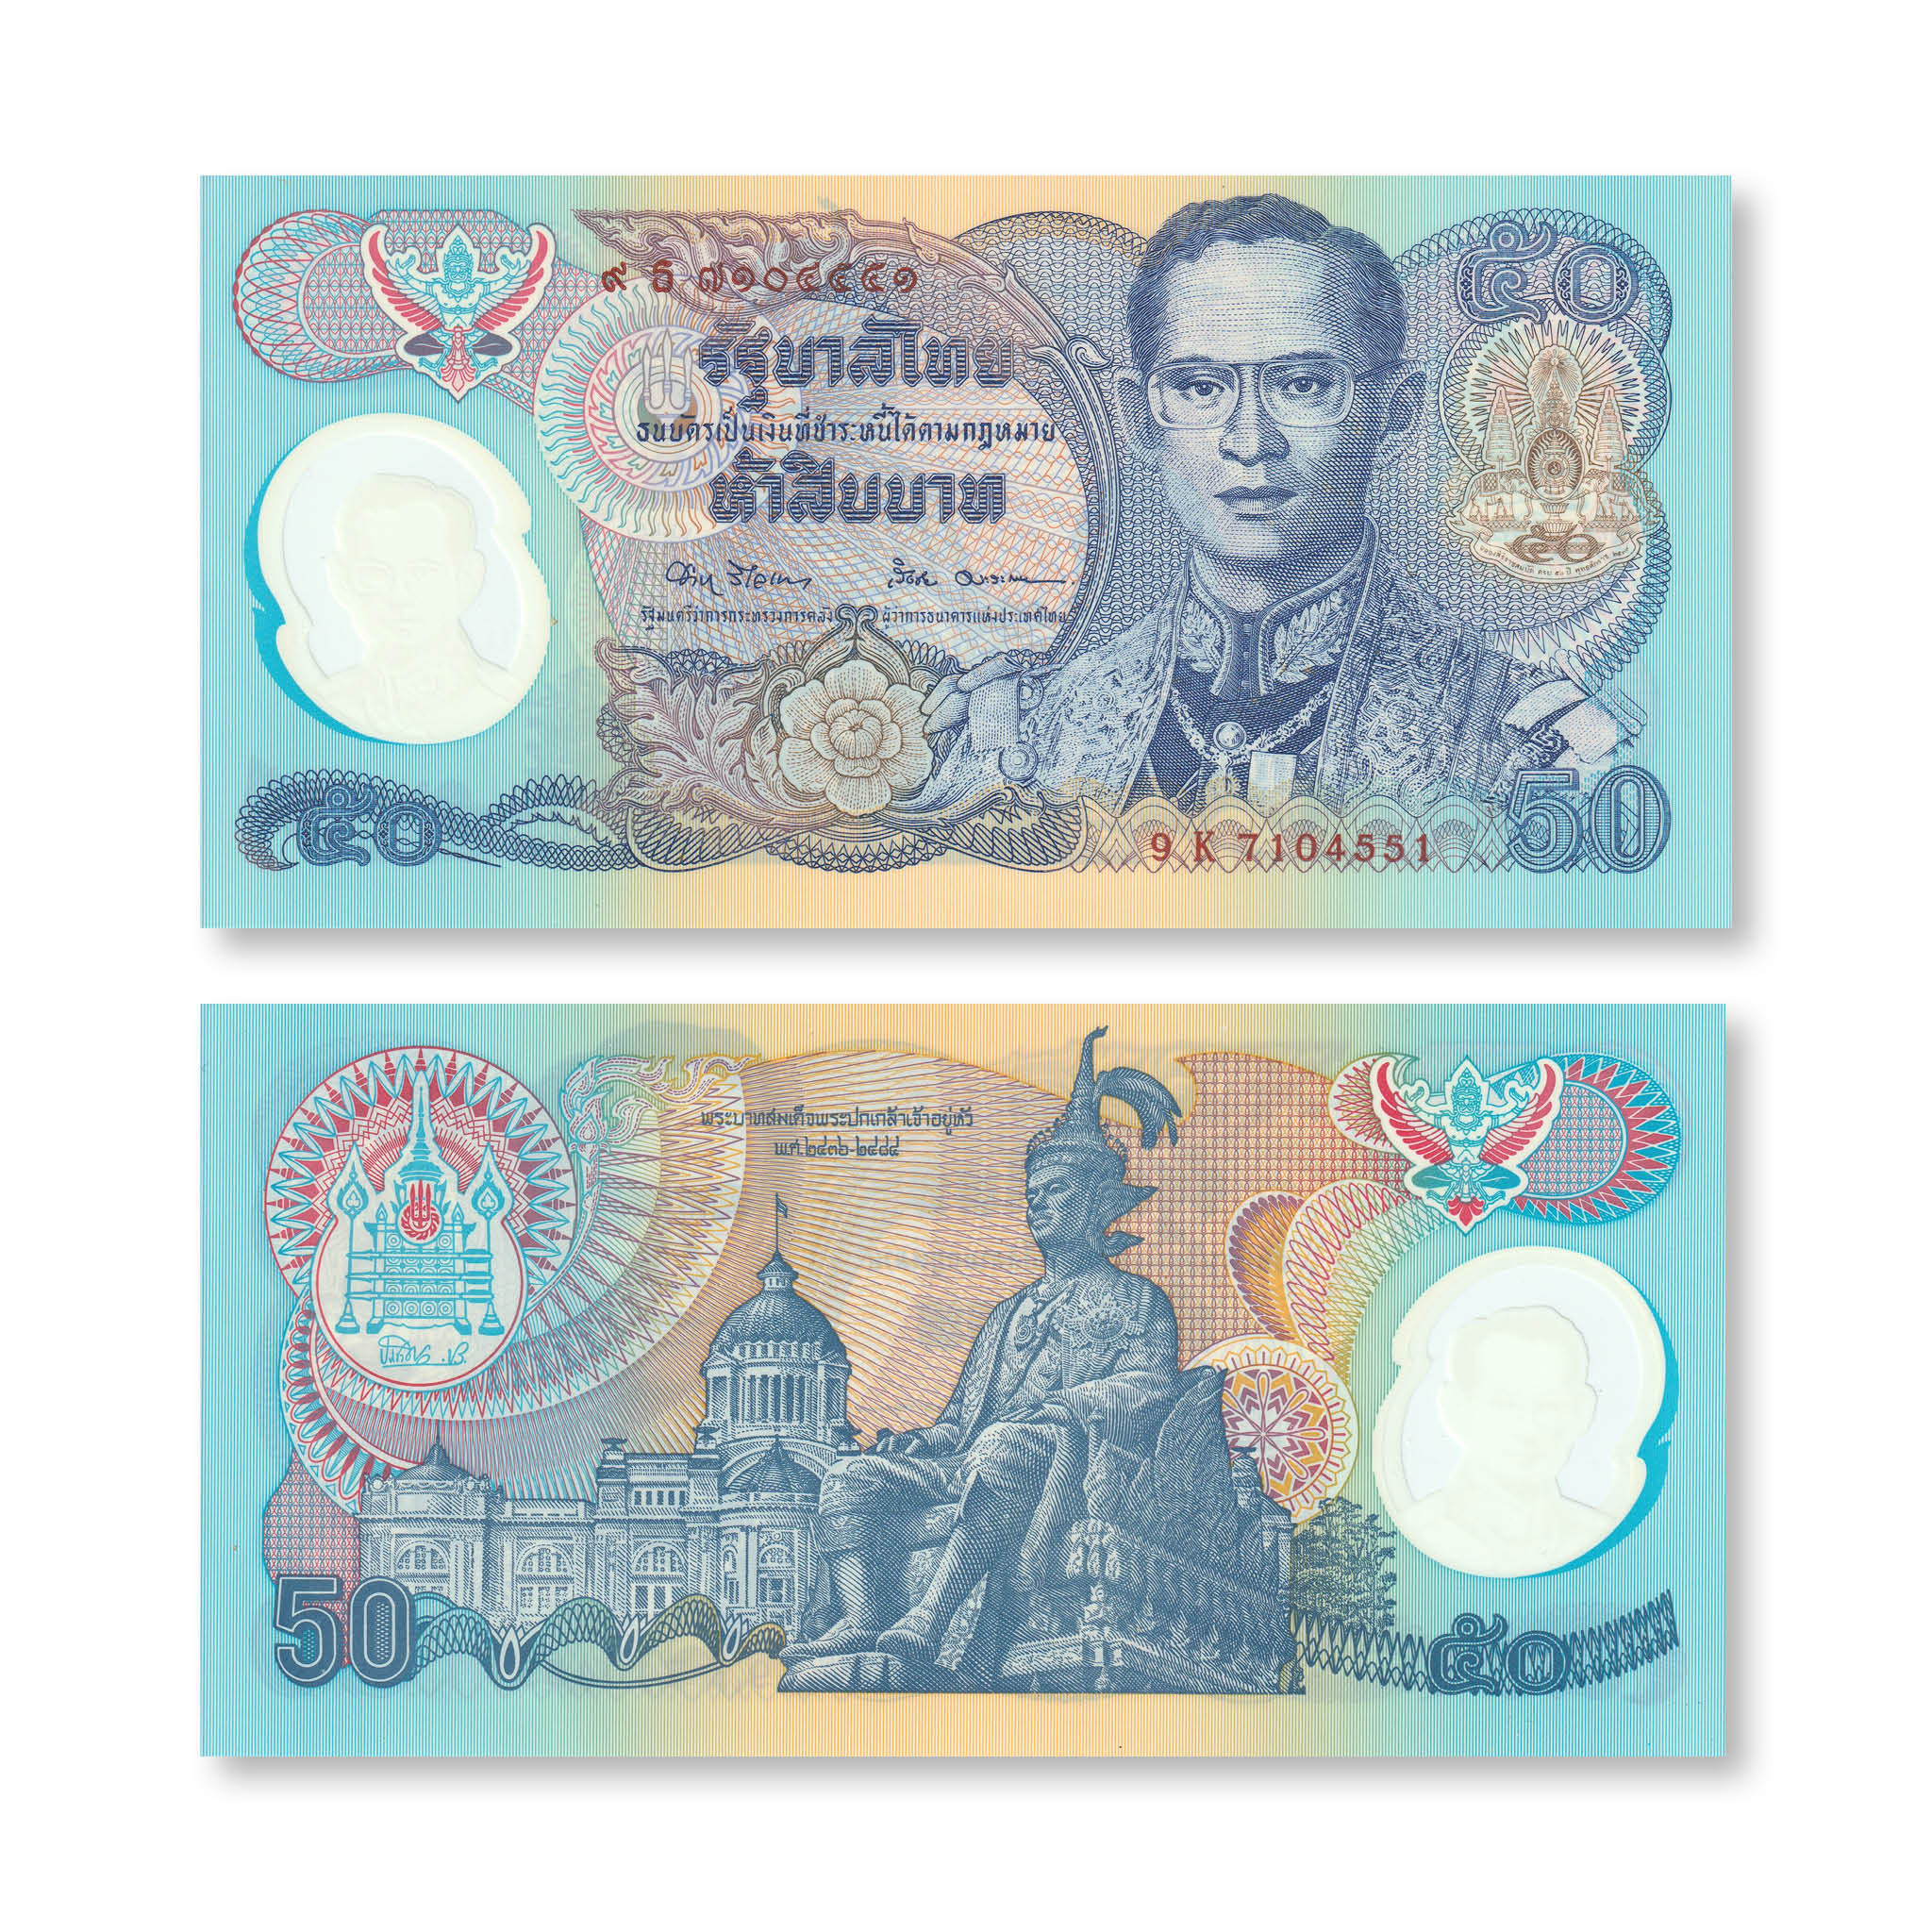 Thailand 50 Baht, 1996, B168b, P99, UNC - Robert's World Money - World Banknotes